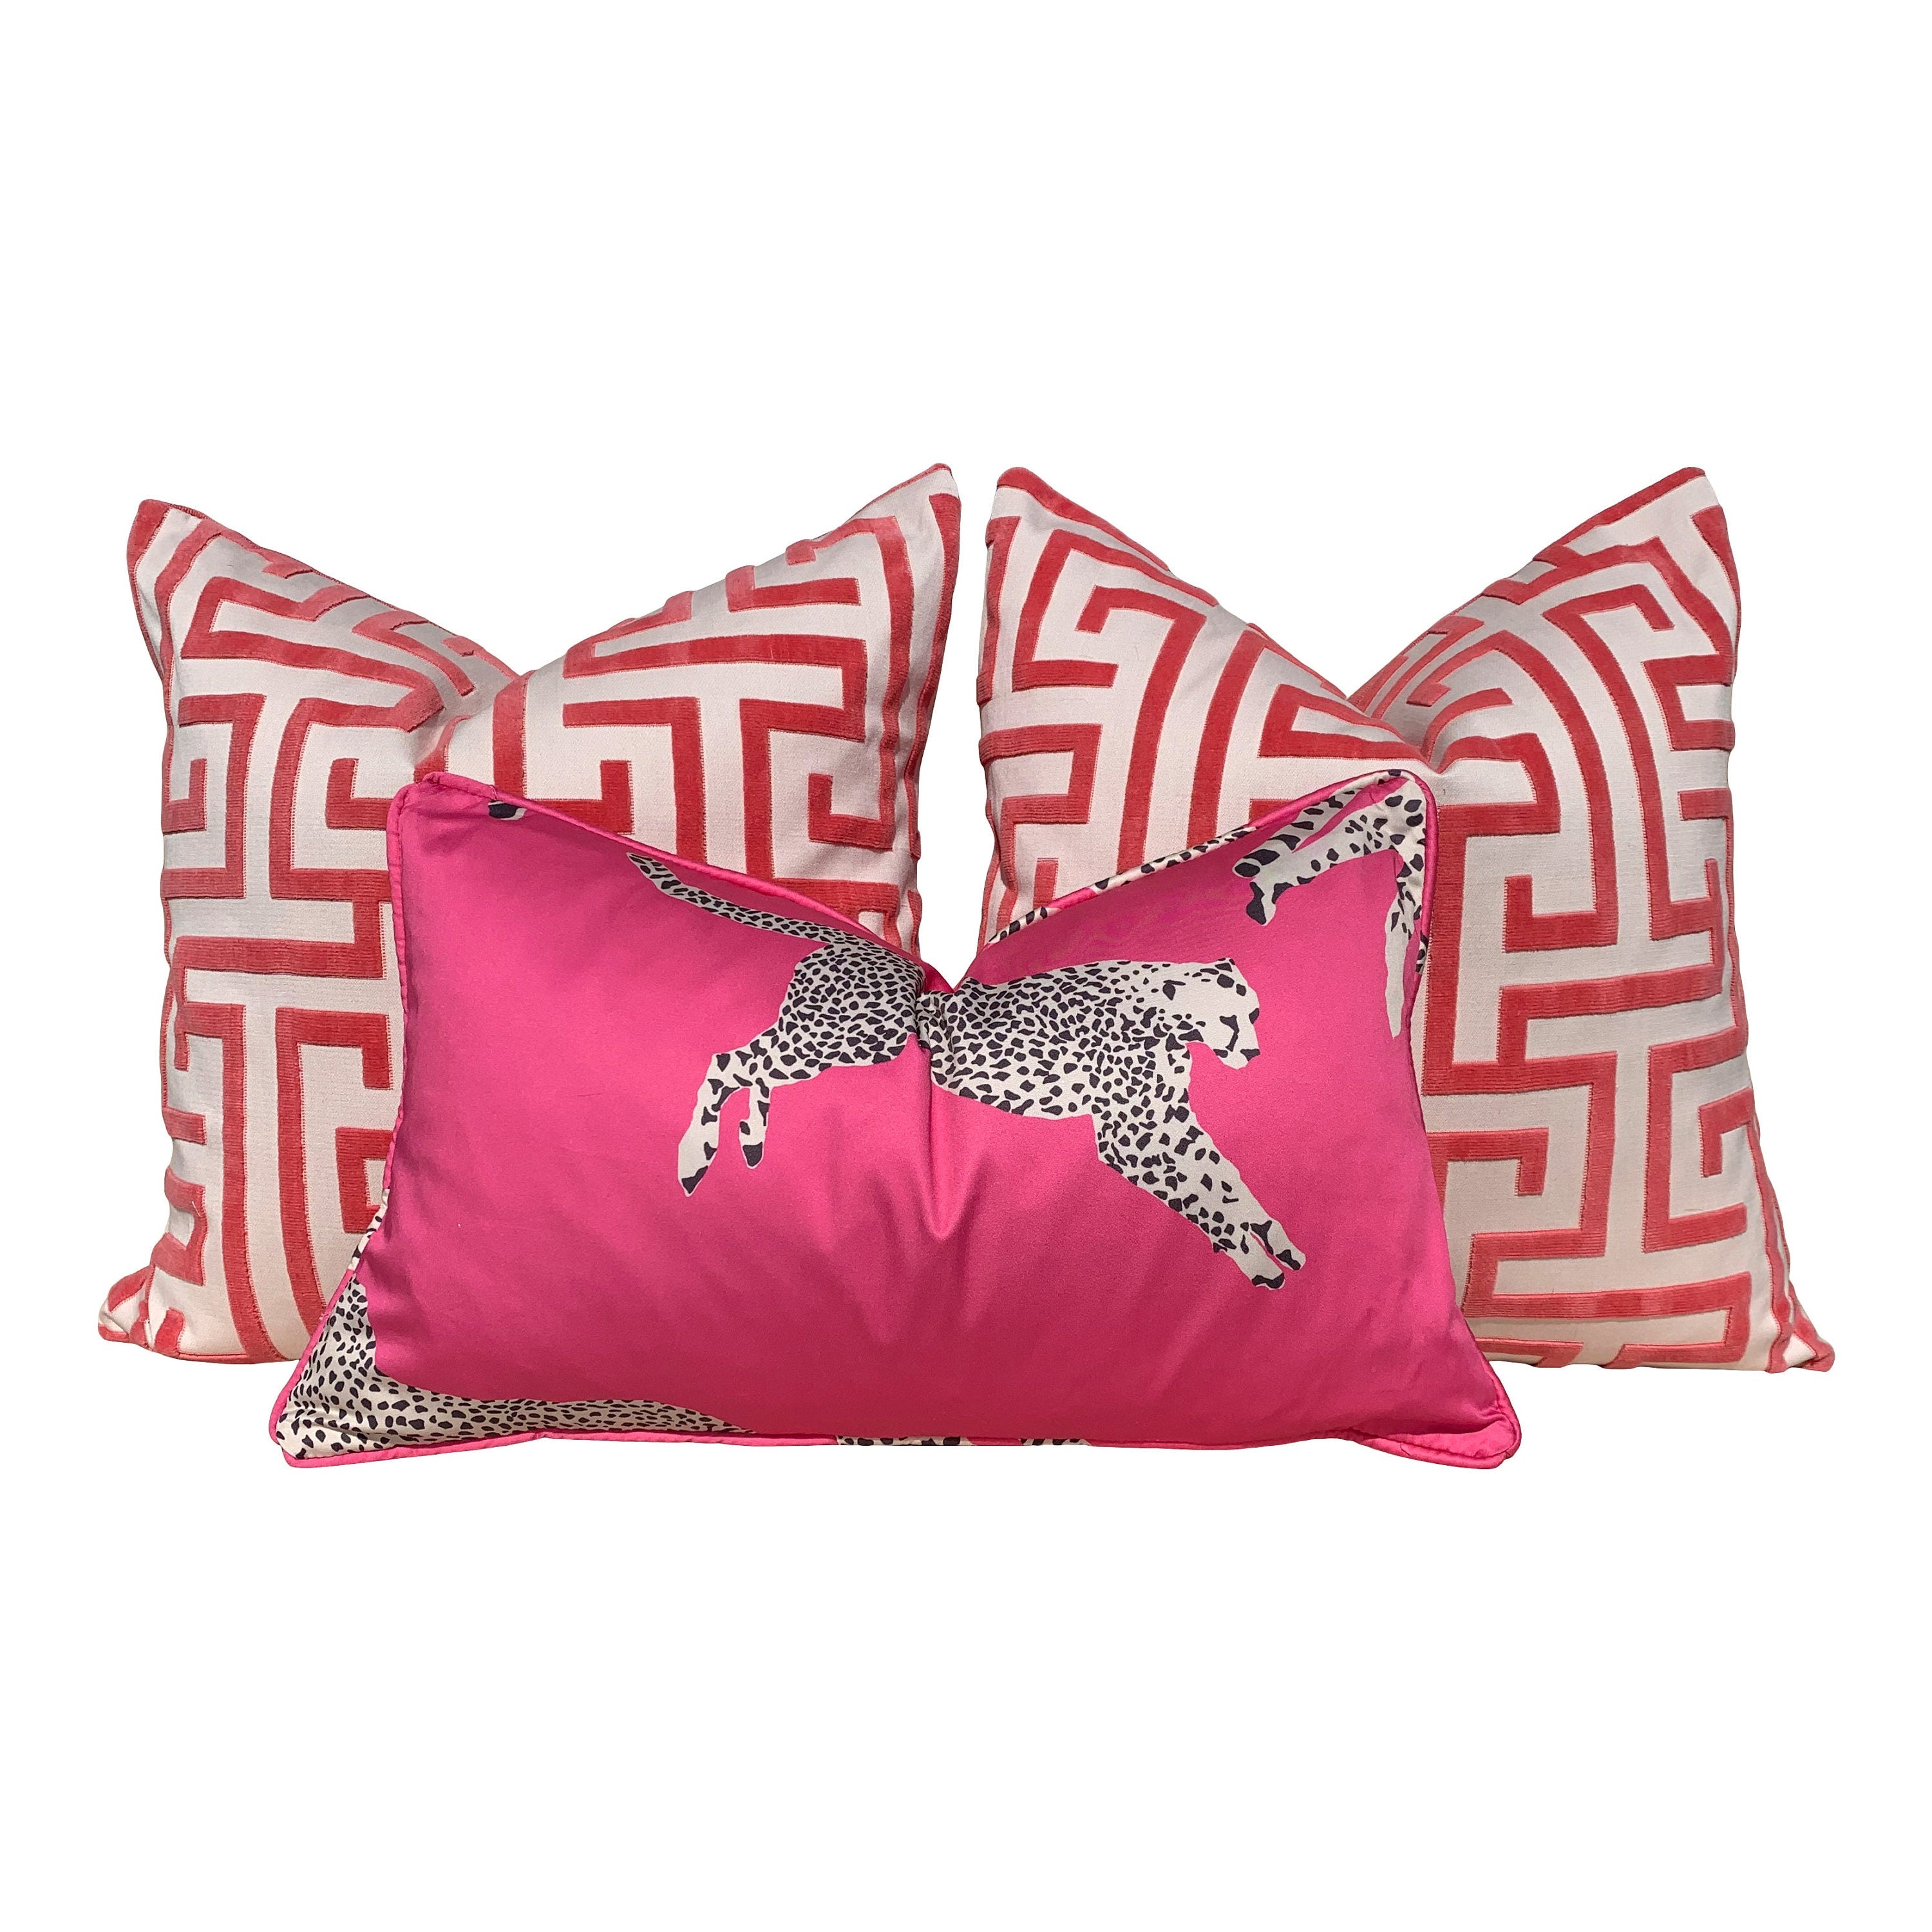 Leaping Cheetah Pink Pillow. Scalamandre Pillow, Bubblegum Pink Pillow, Animal Print Cushion, Designer Pillow, Euro Sham, Long Lumbar Pillow